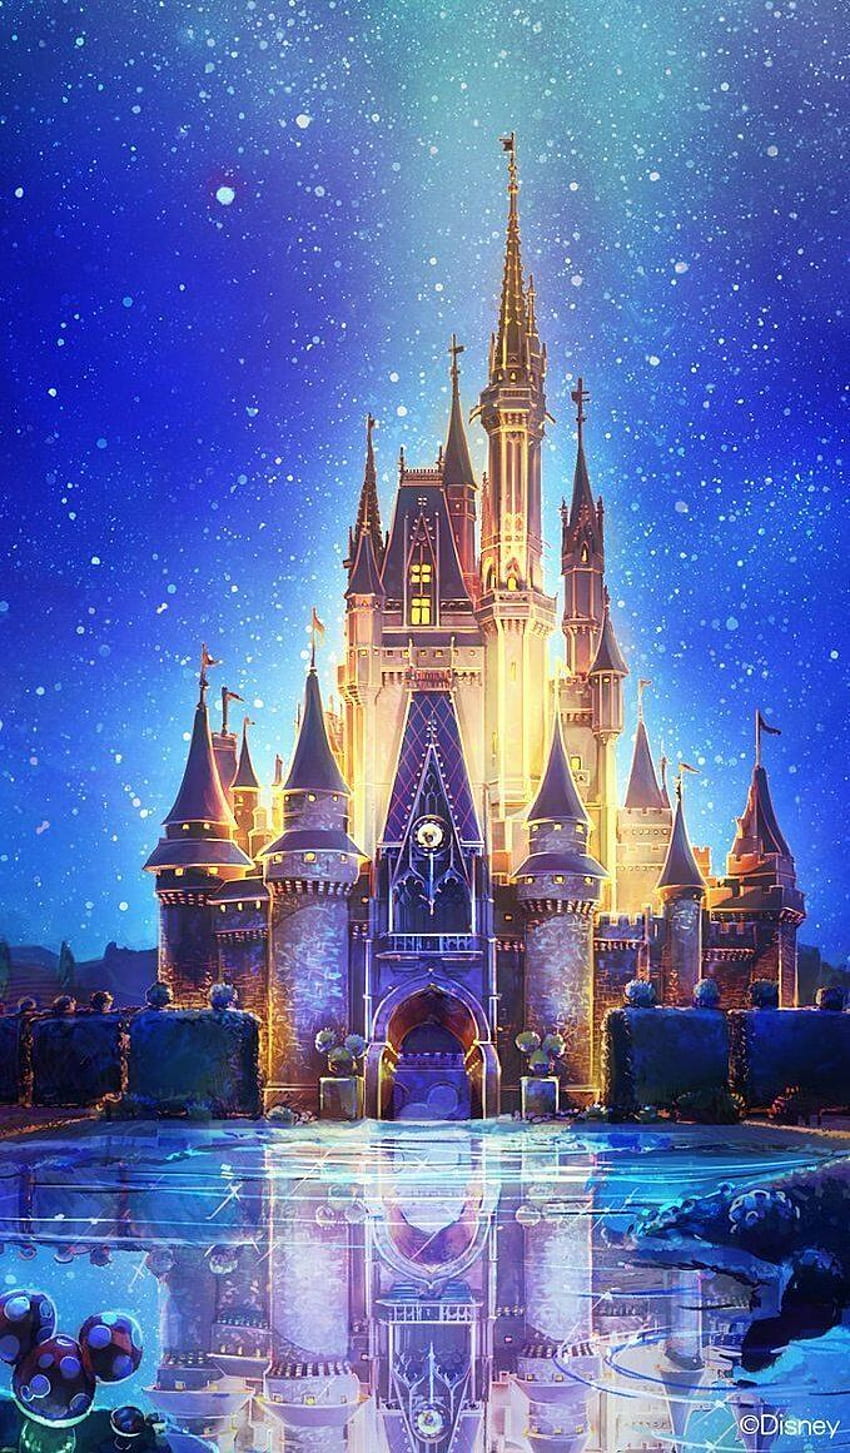 Top 999+ Disney World Wallpaper Full HD, 4K✓Free to Use